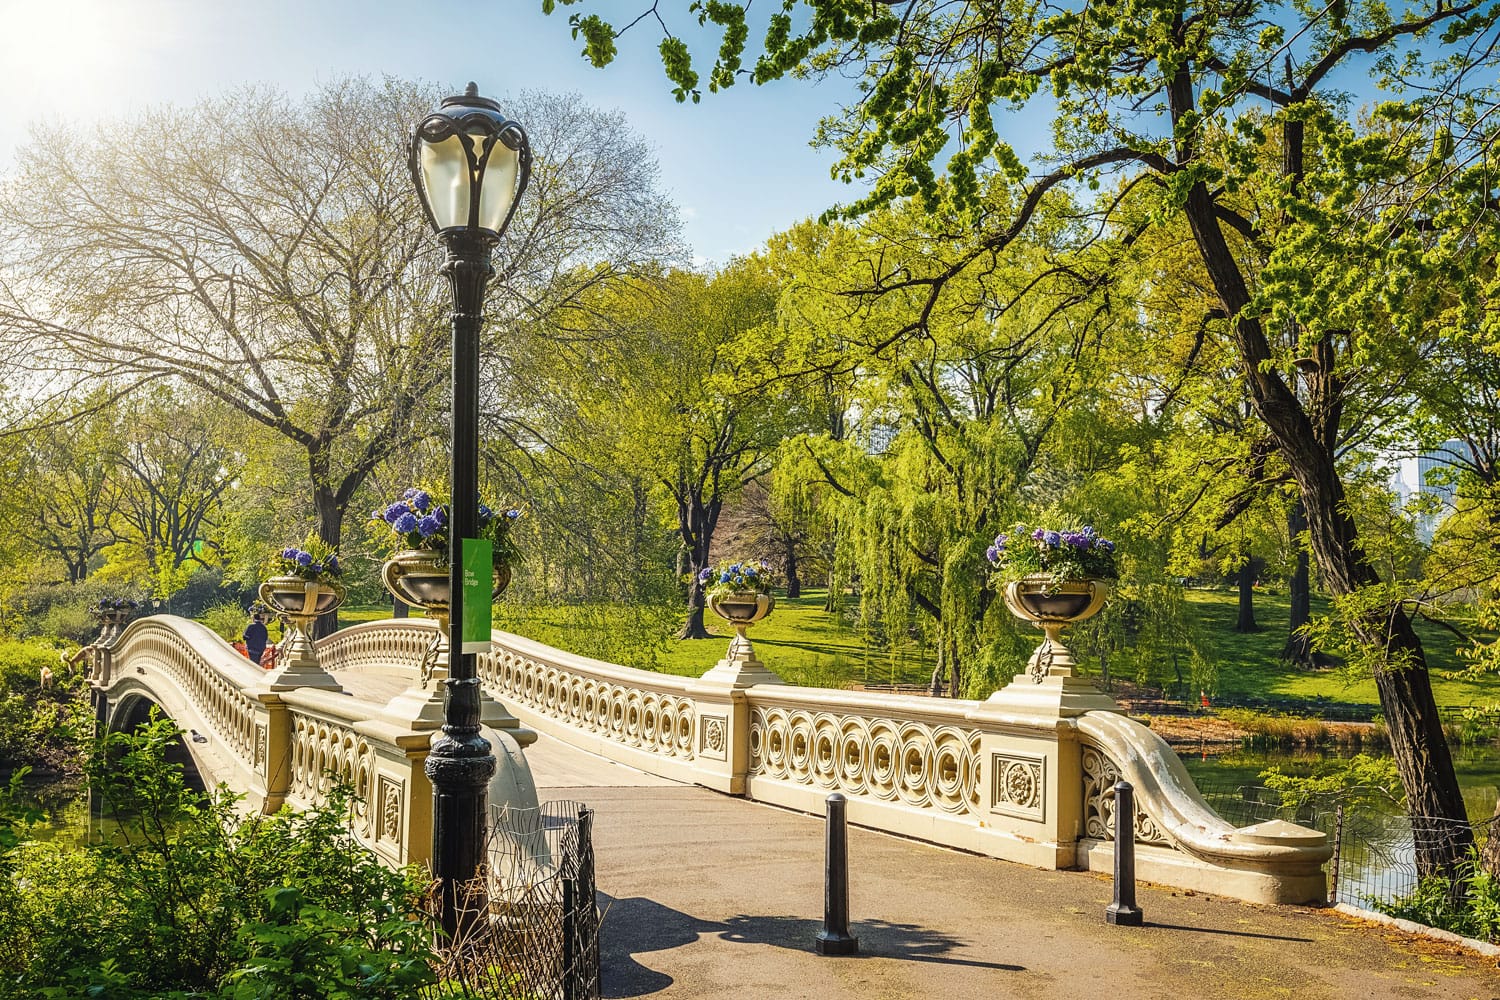 Bow bridge in Central park, New York City